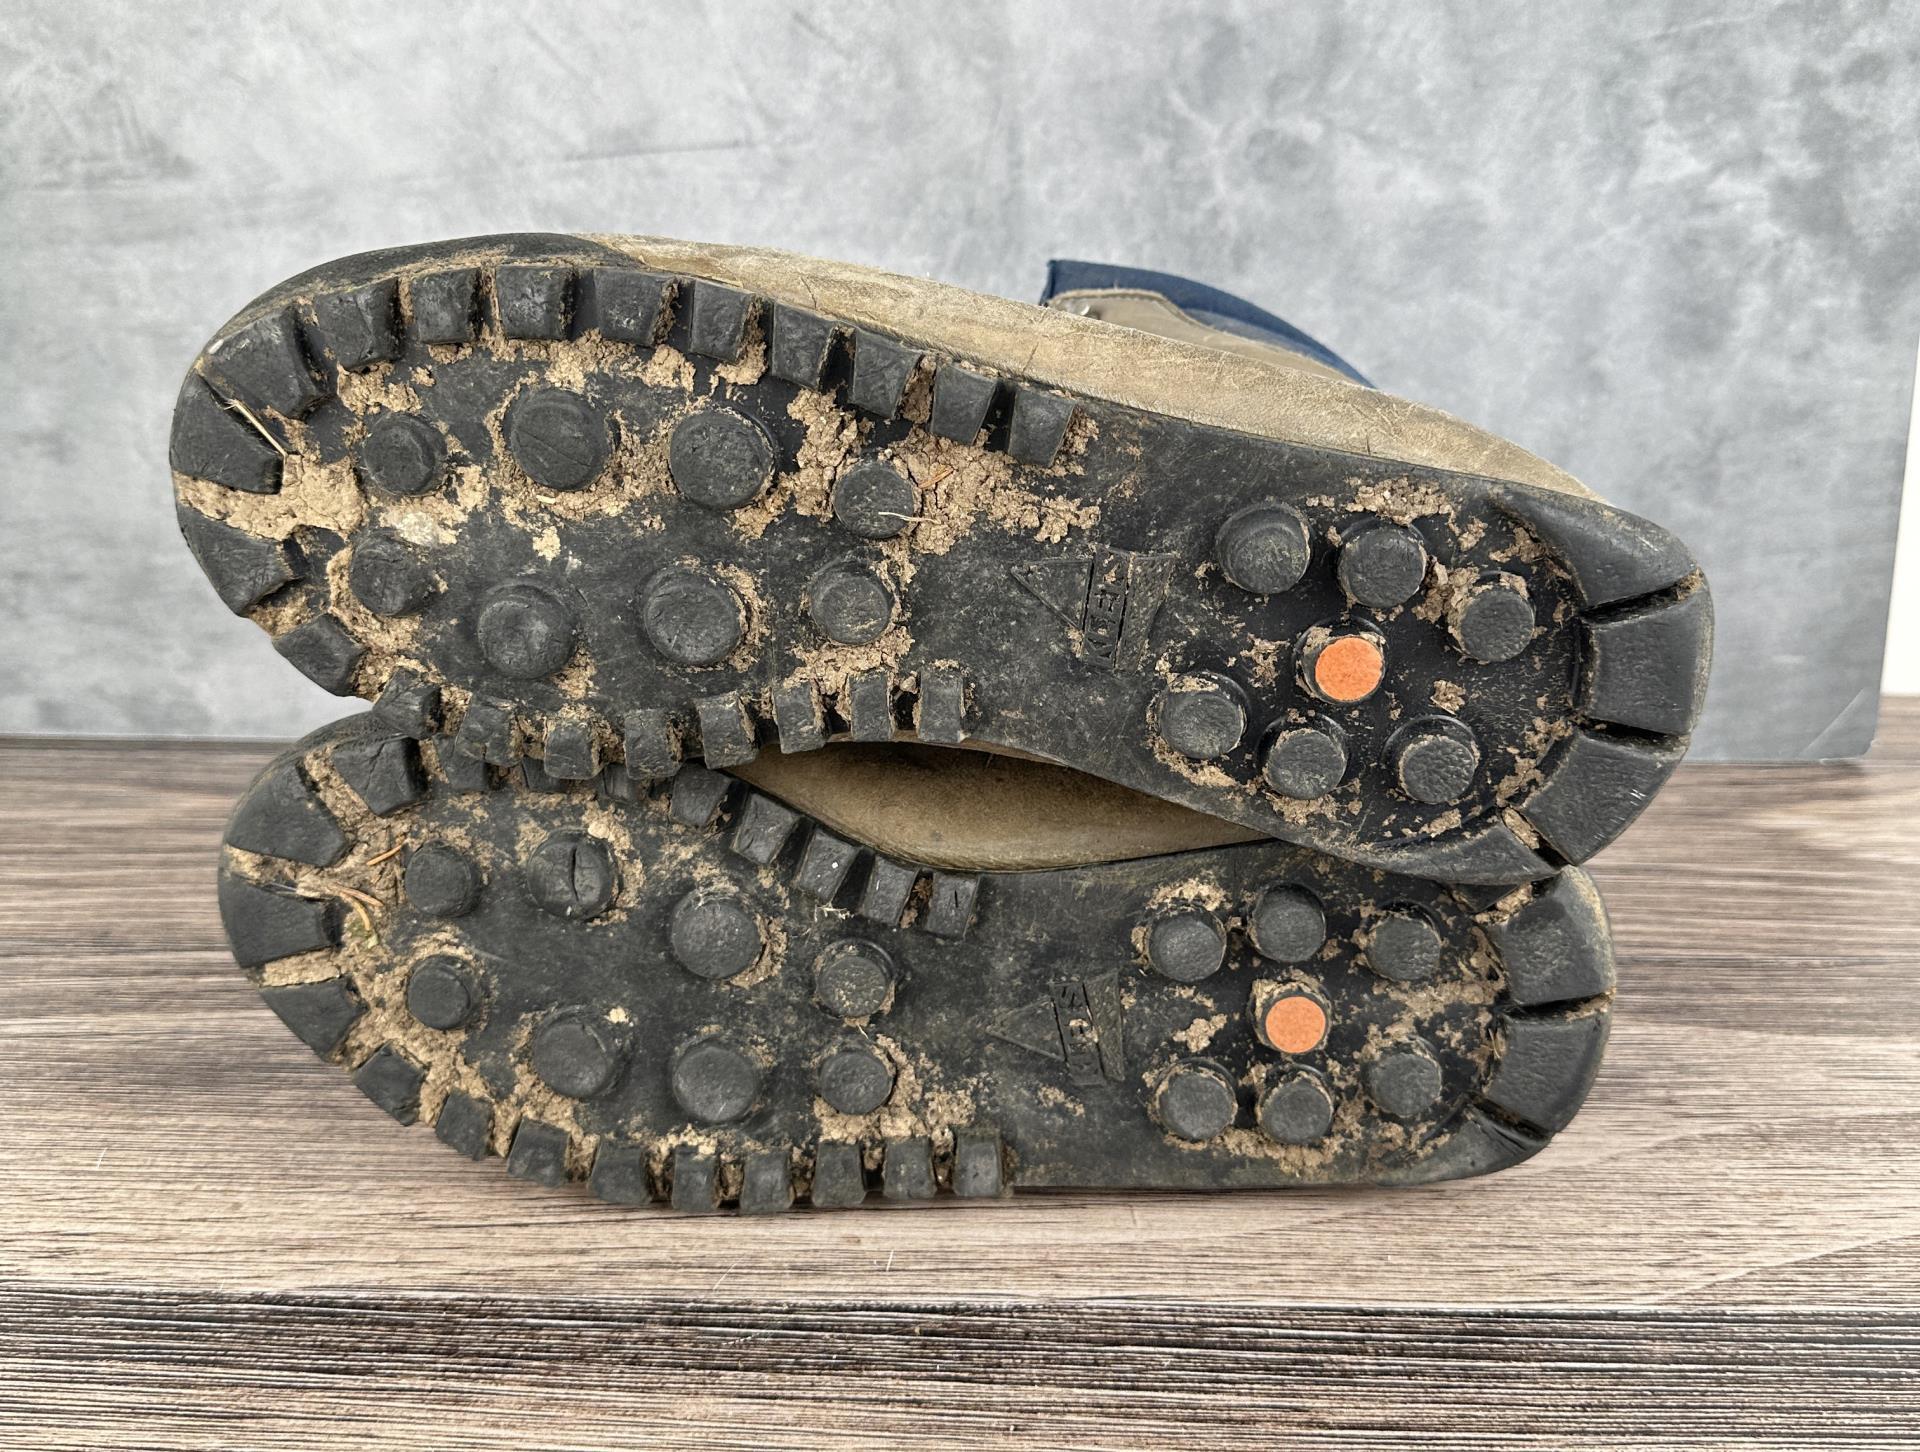 Asolo Sport Explorer Hiking Boots Size 11